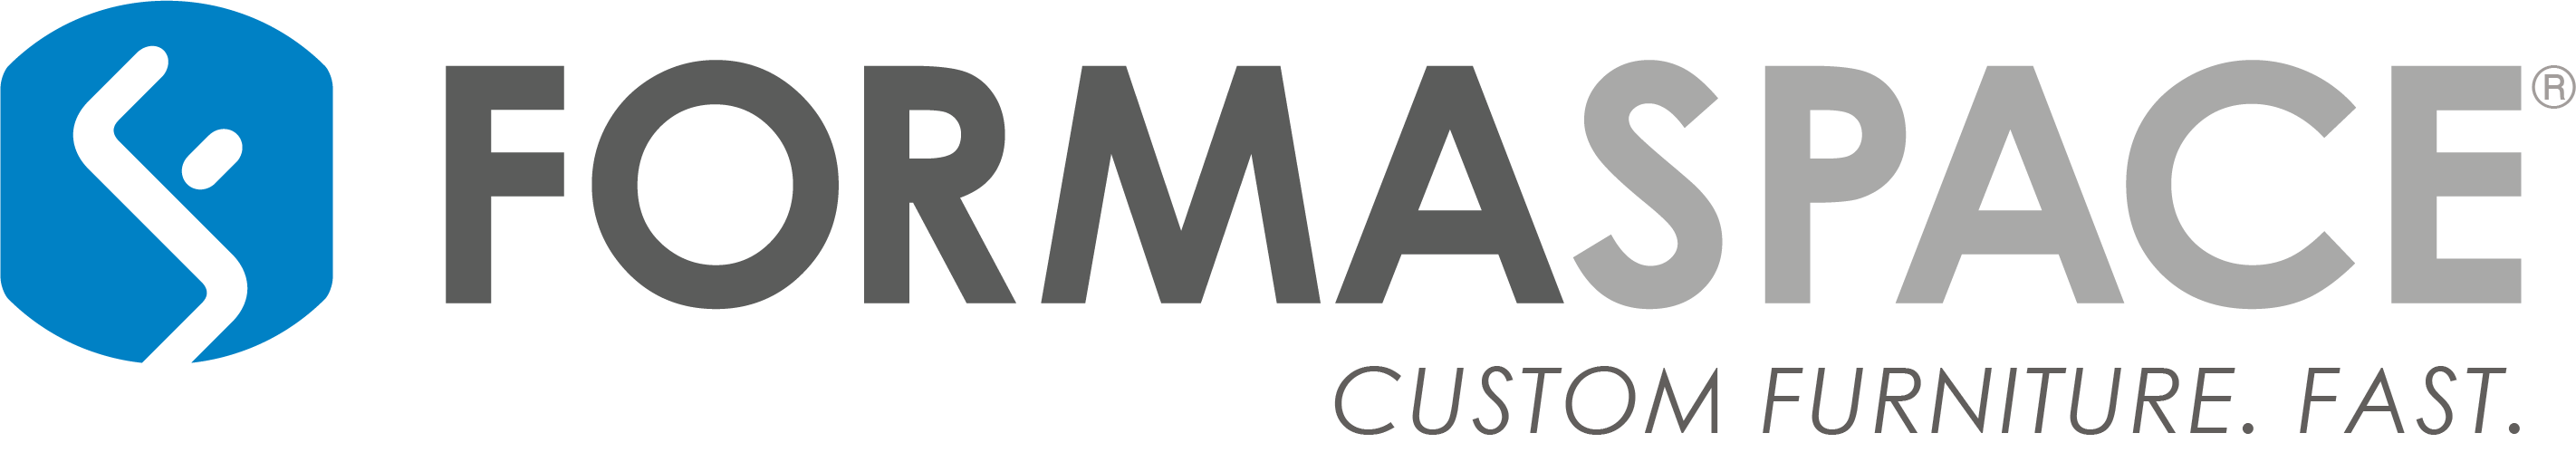 Customer - Formaspace Logo